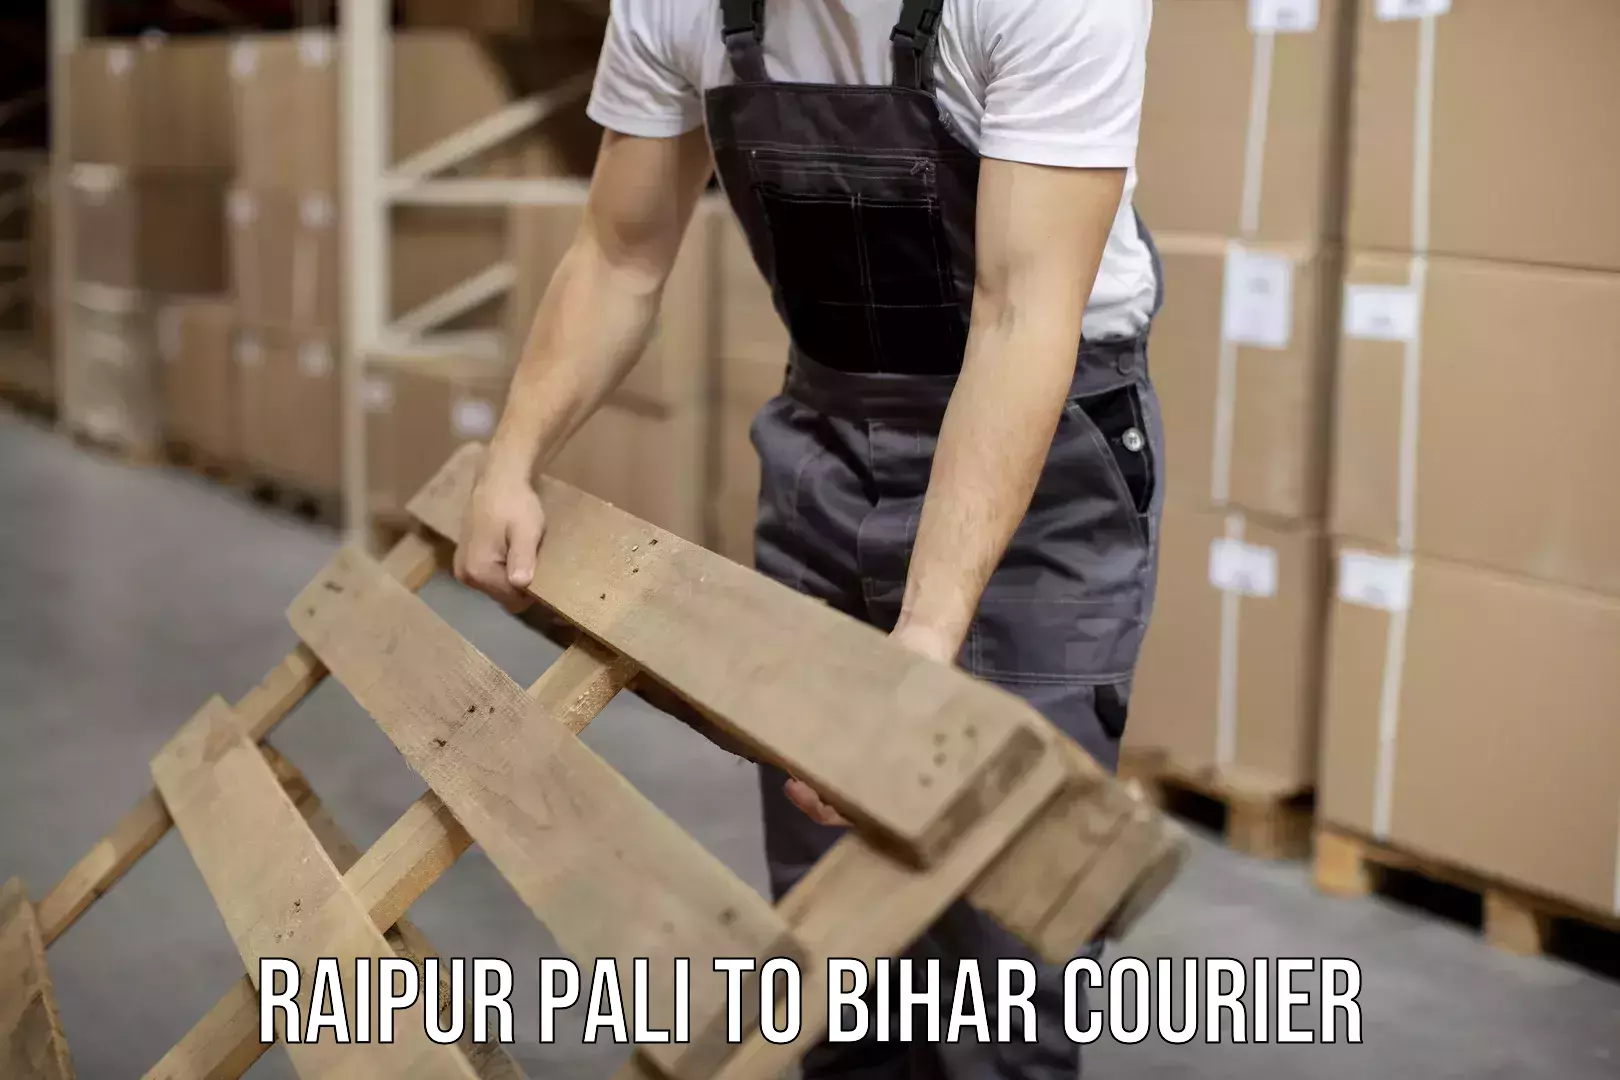 24-hour courier service Raipur Pali to Bihar